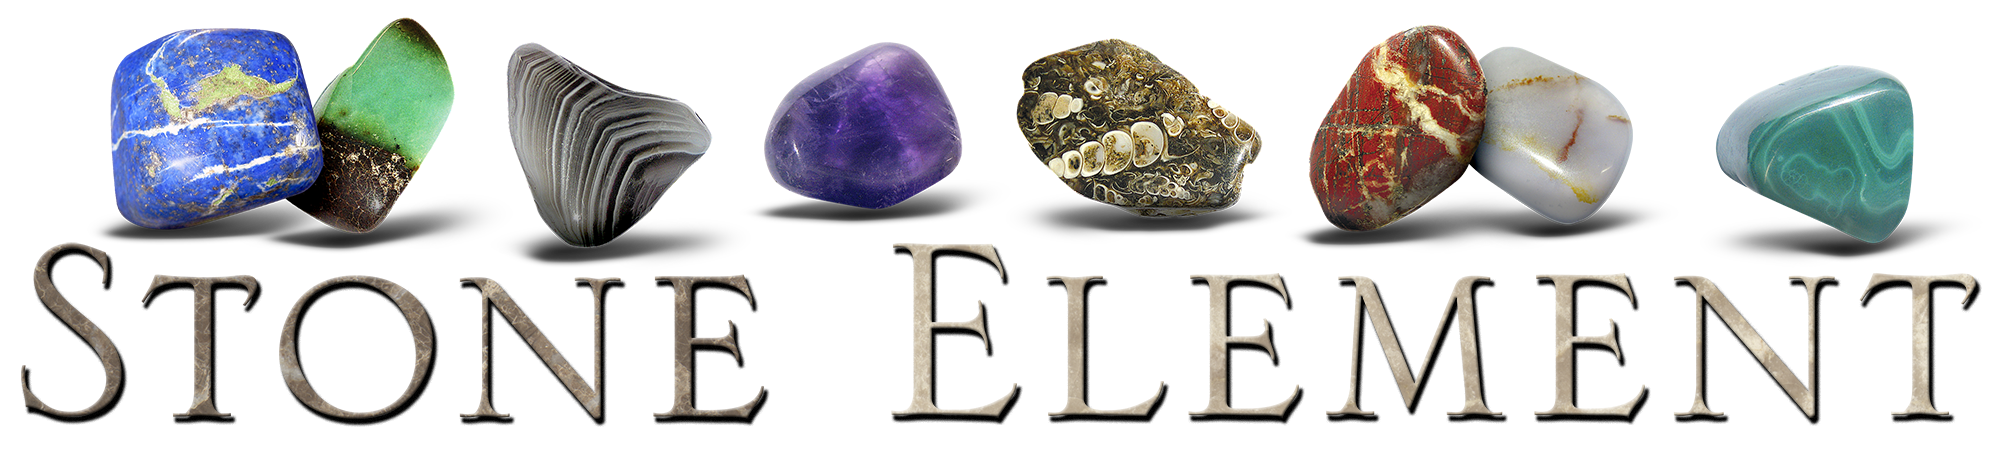 Логотип stone. Логотип камень. Природный камень логотип. Декоративный камень логотип. Натуральные камни лого.